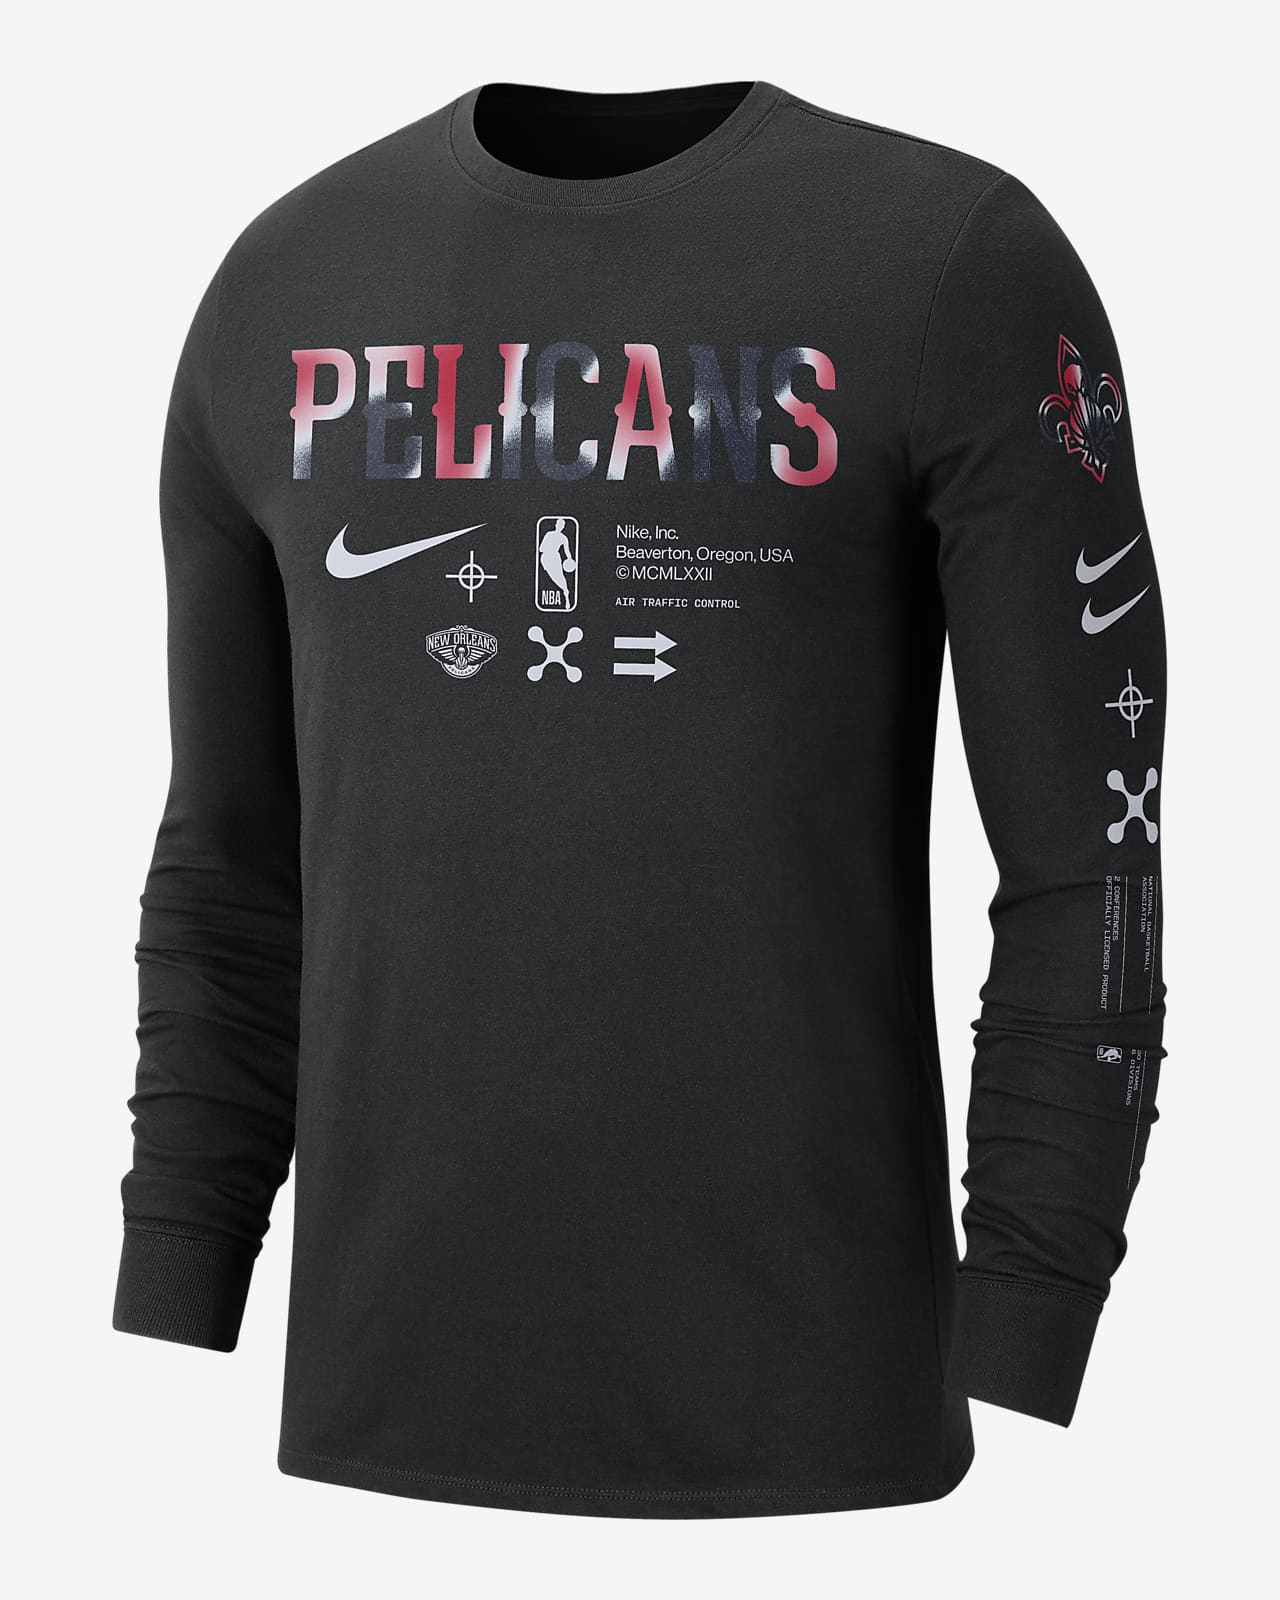 New Orleans Pelicans Men's Nike NBA Long-Sleeve T-Shirt